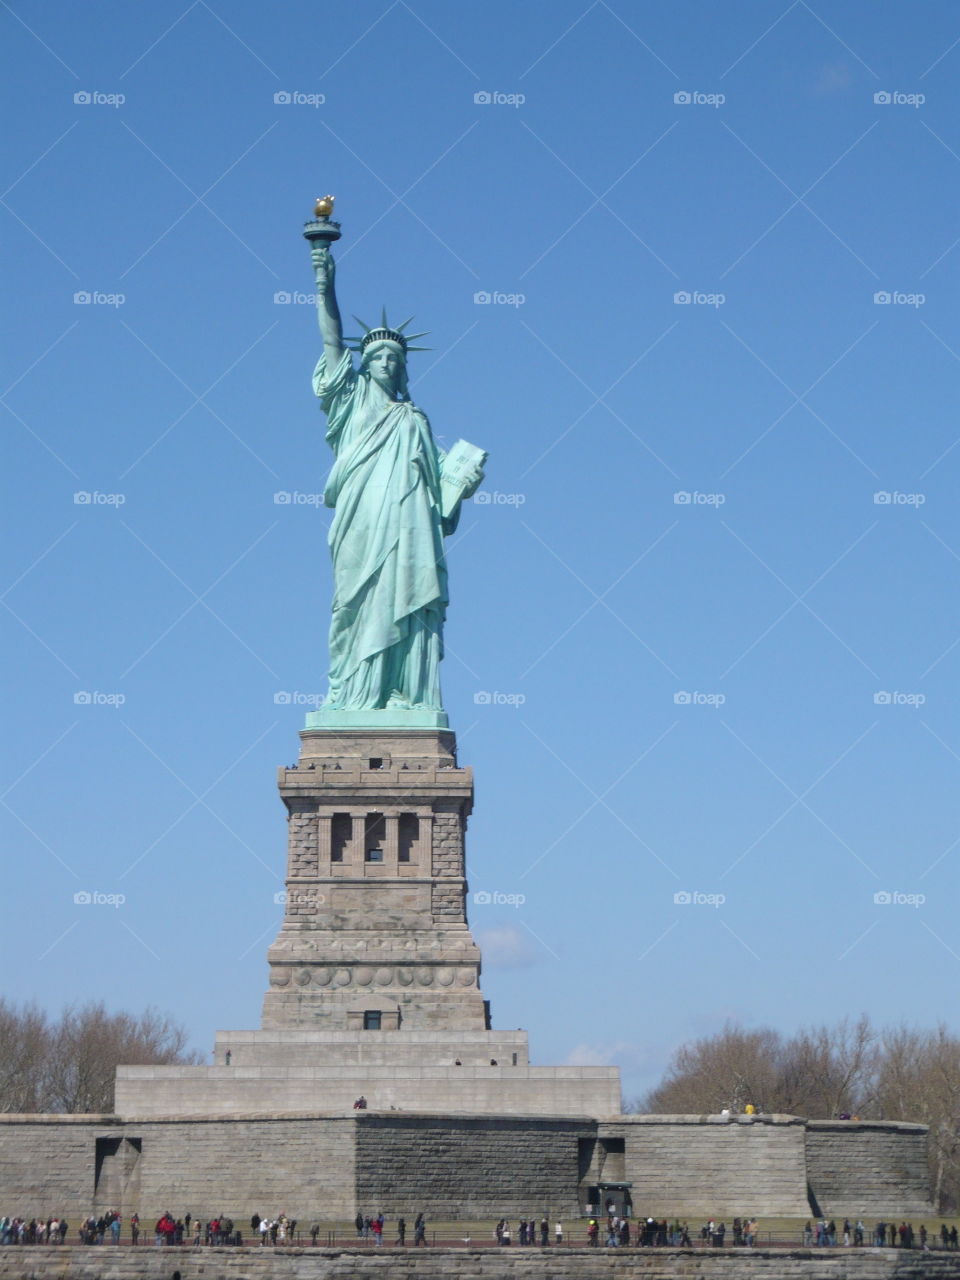 An image of Lady Liberty.